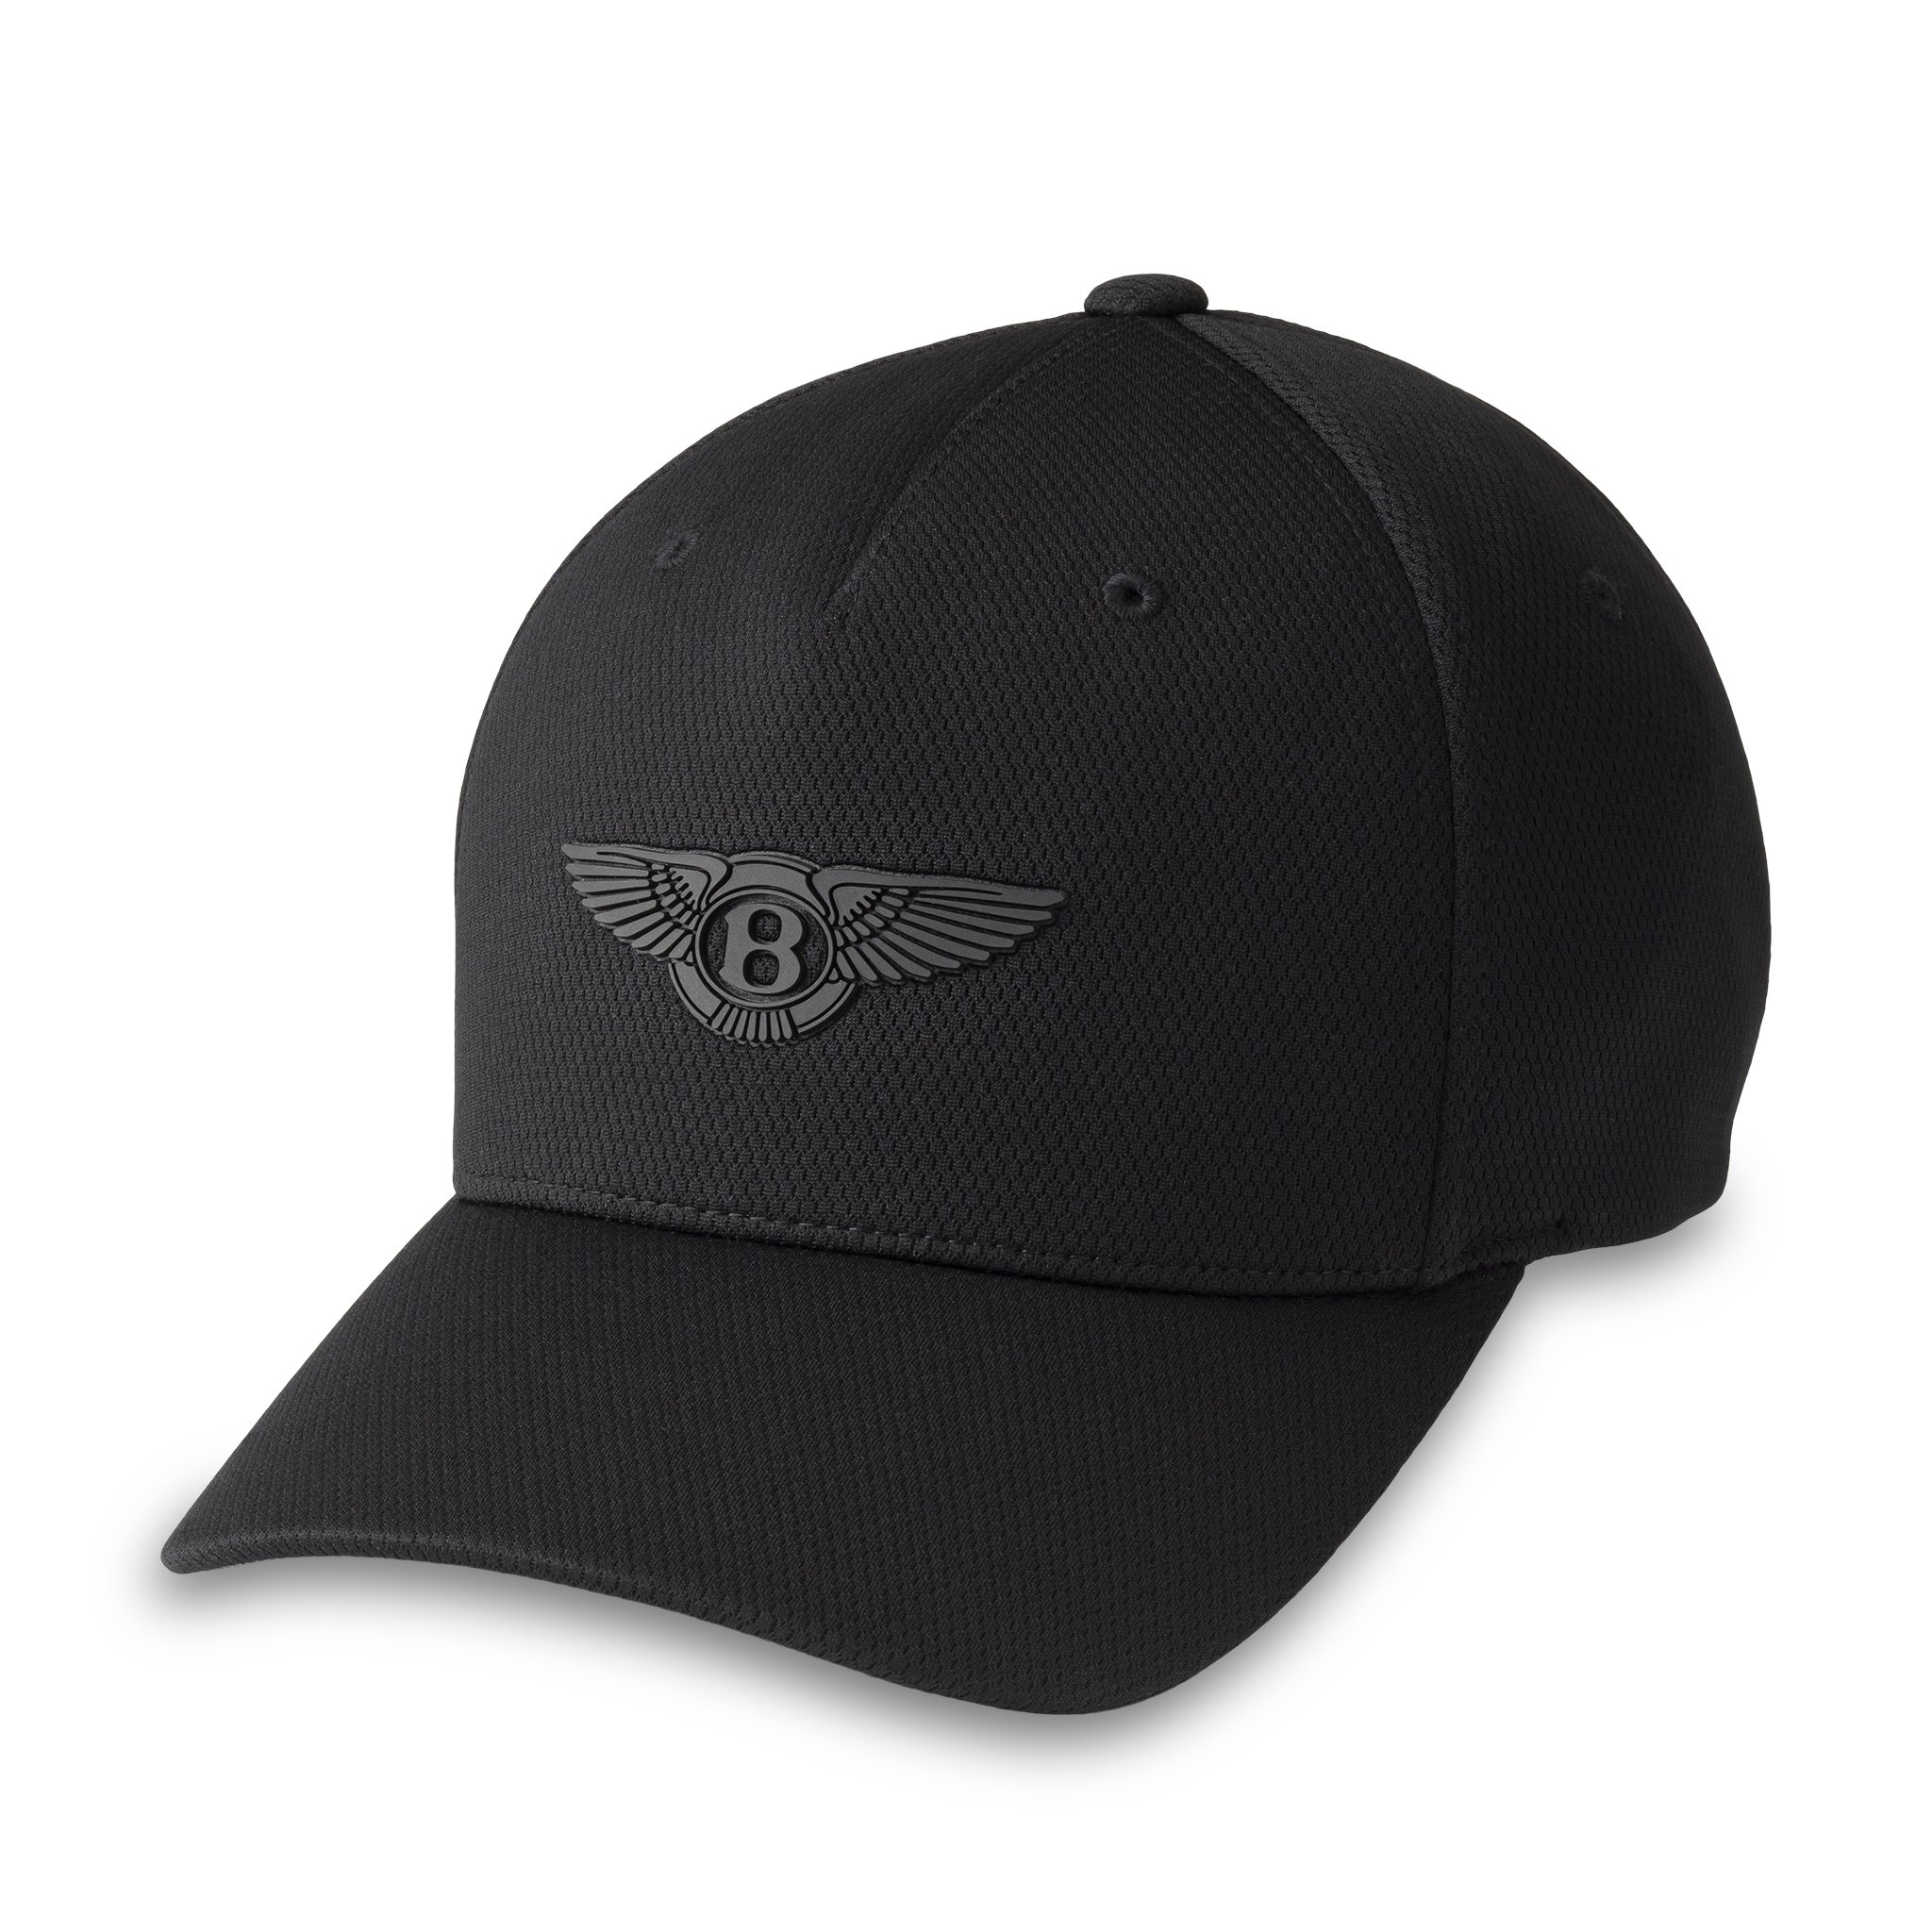 Bentley Baseball Cap (Black)